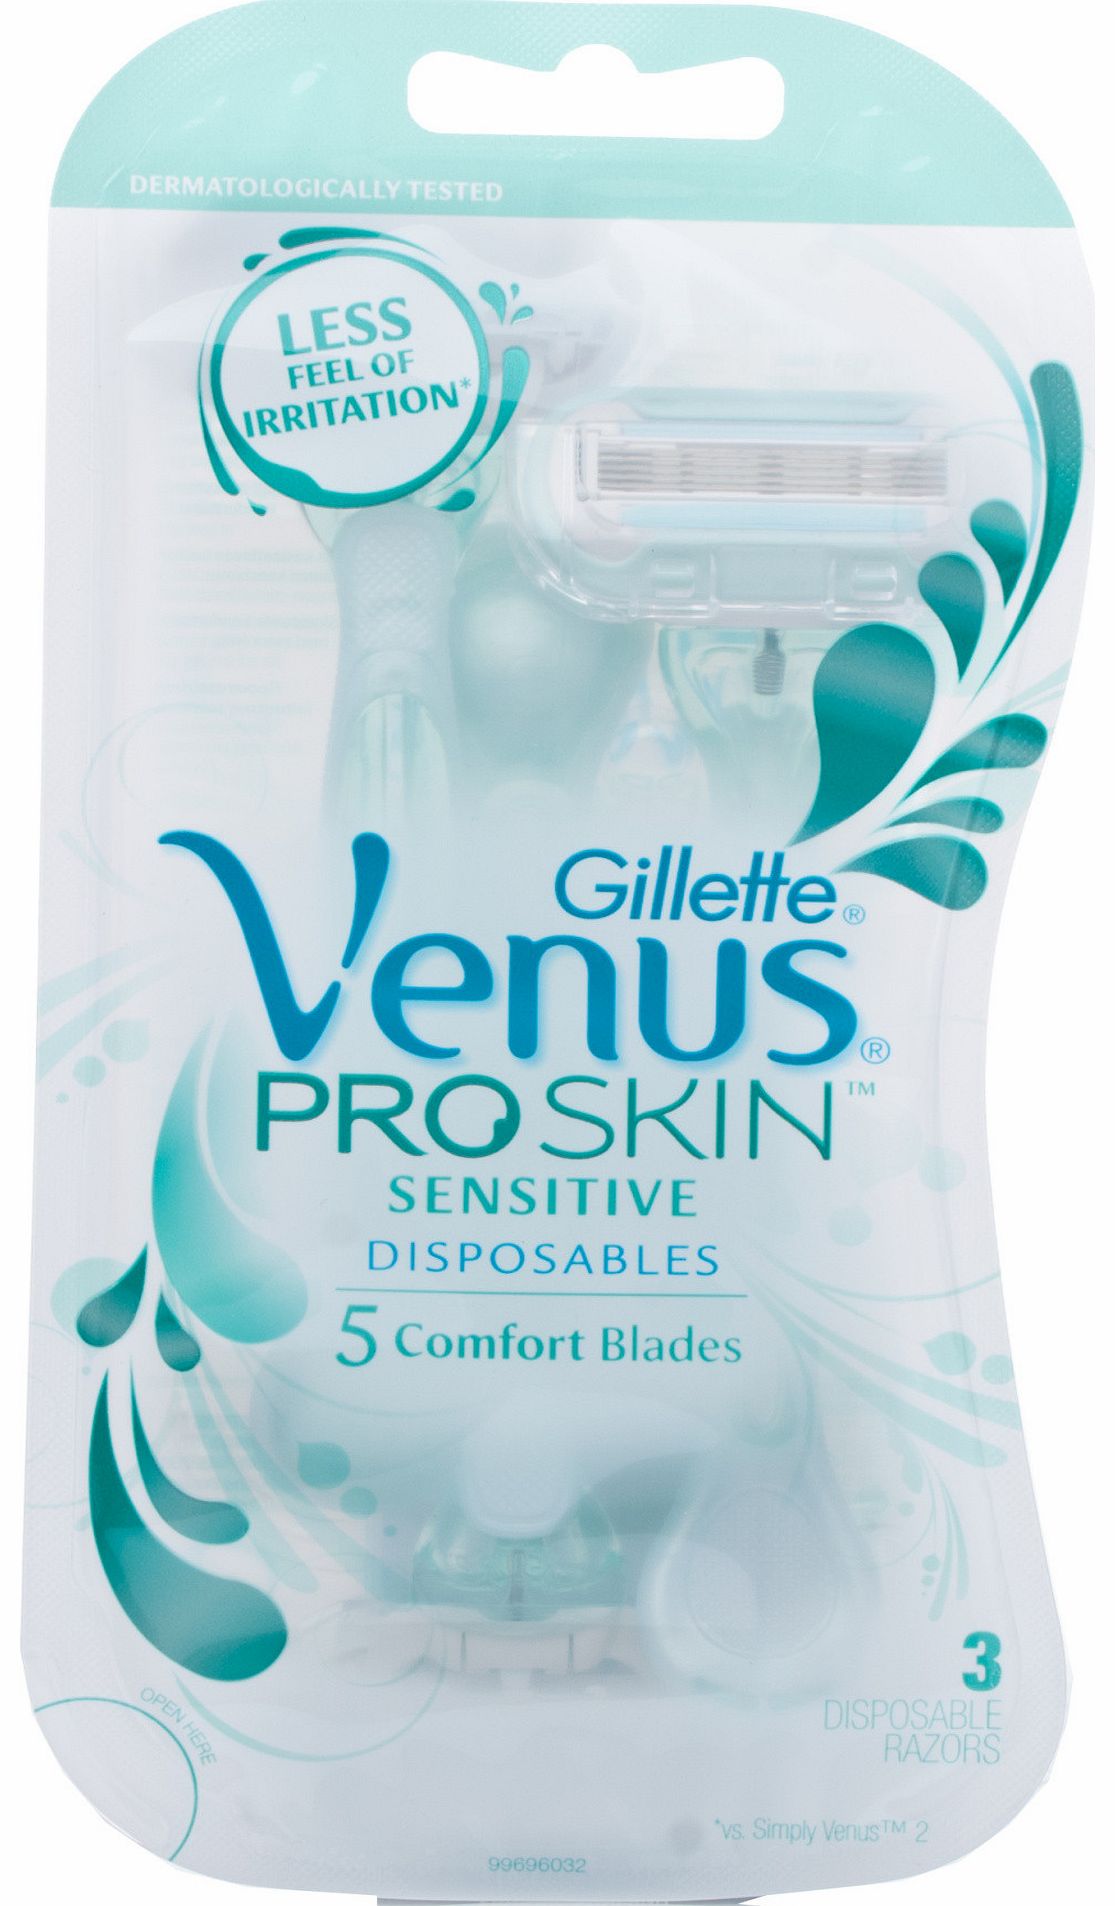 Venus Proskin Sensitive Disposable